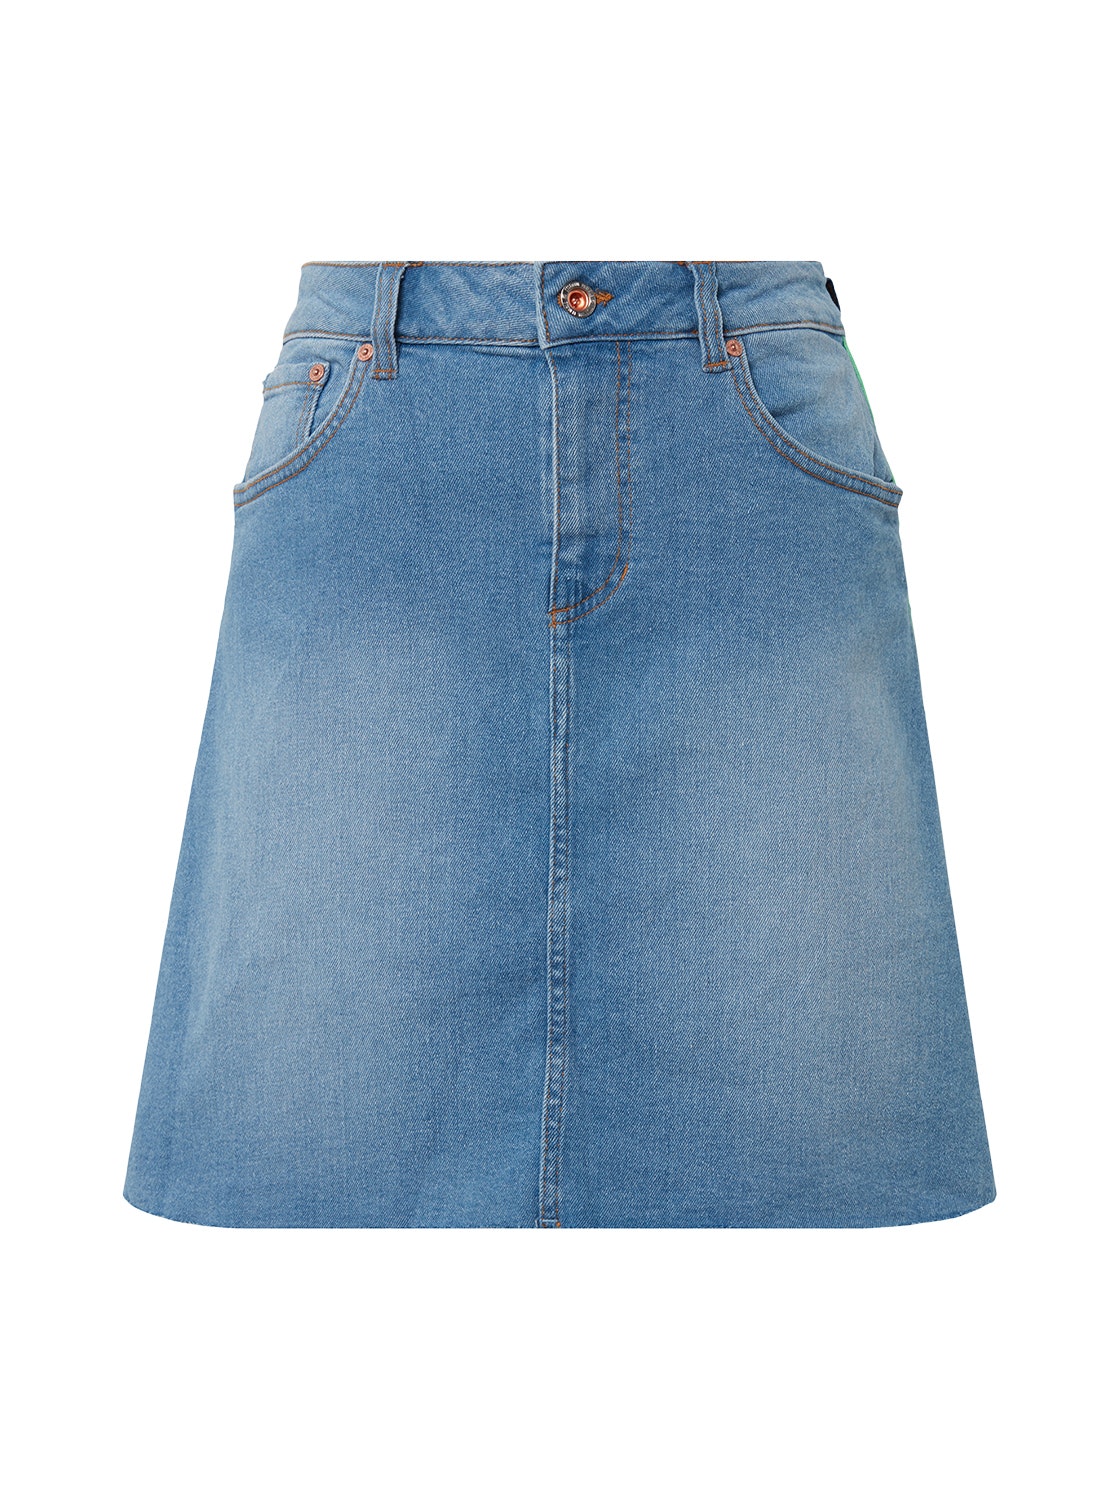 denim skirt with sidetape, mid stone wash denim          Blue